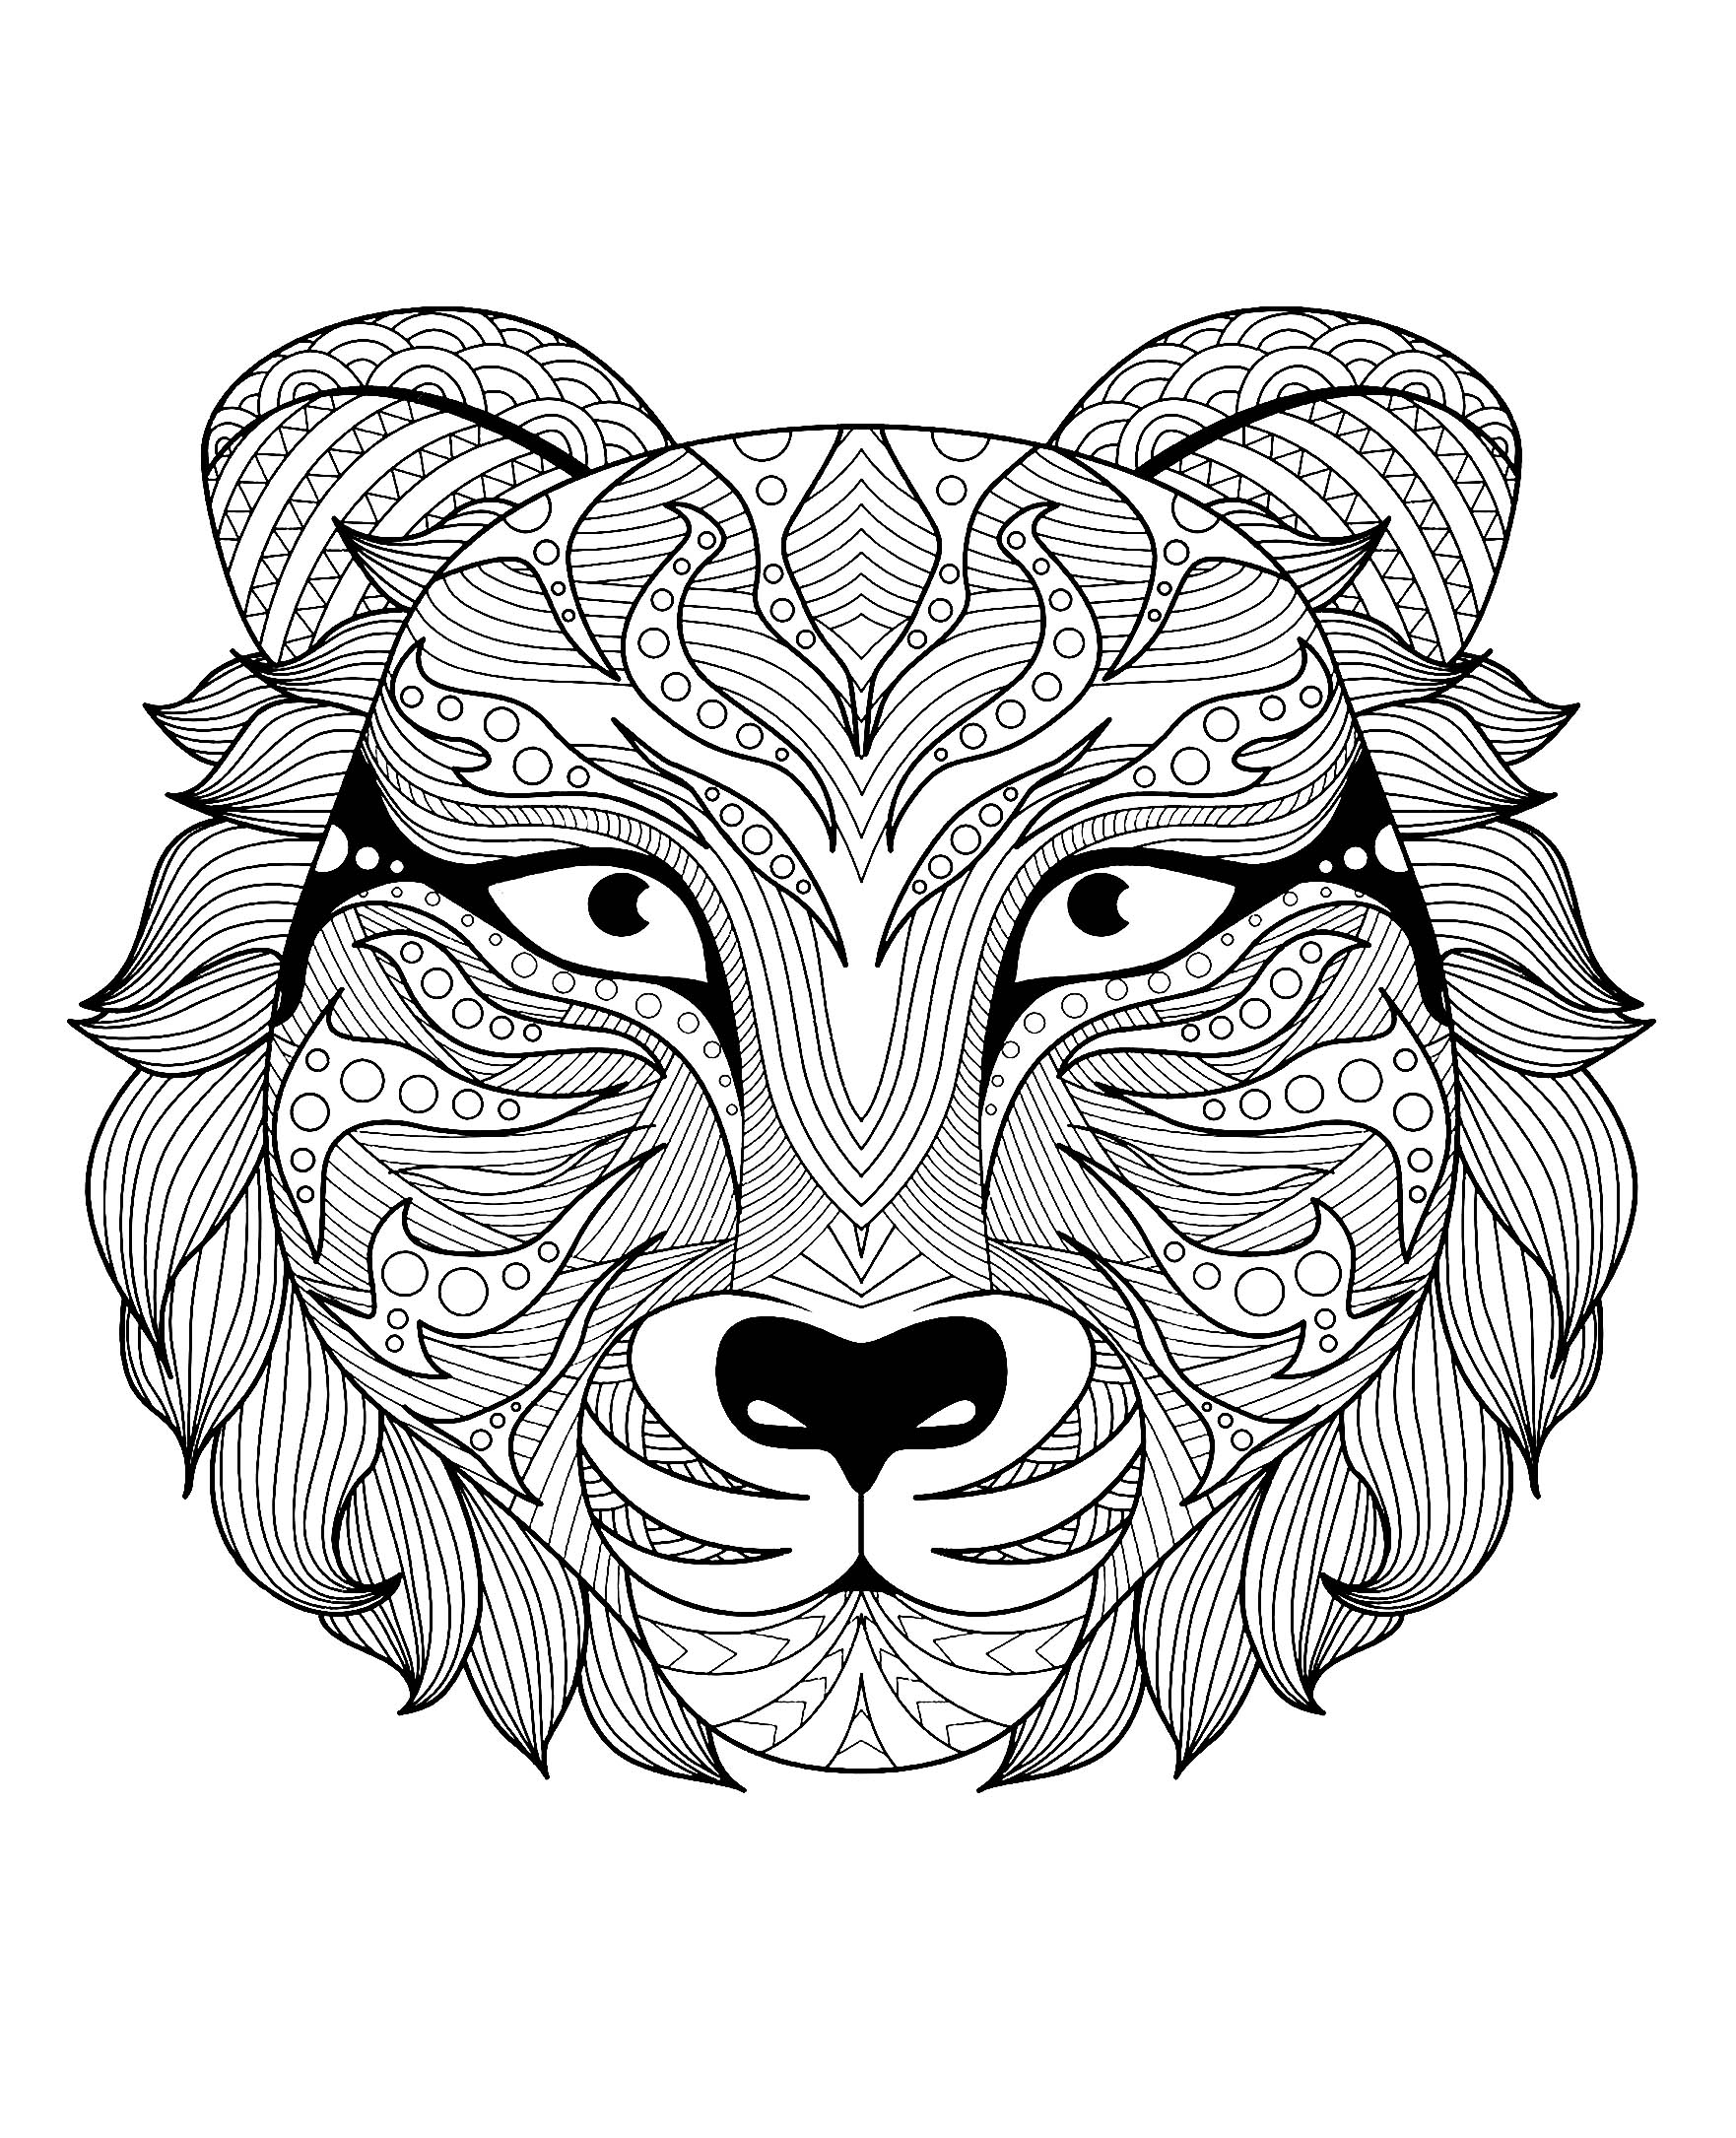 Magnífica cabeza de tigre, Artista : Bimdeedee   Origen : 123rf